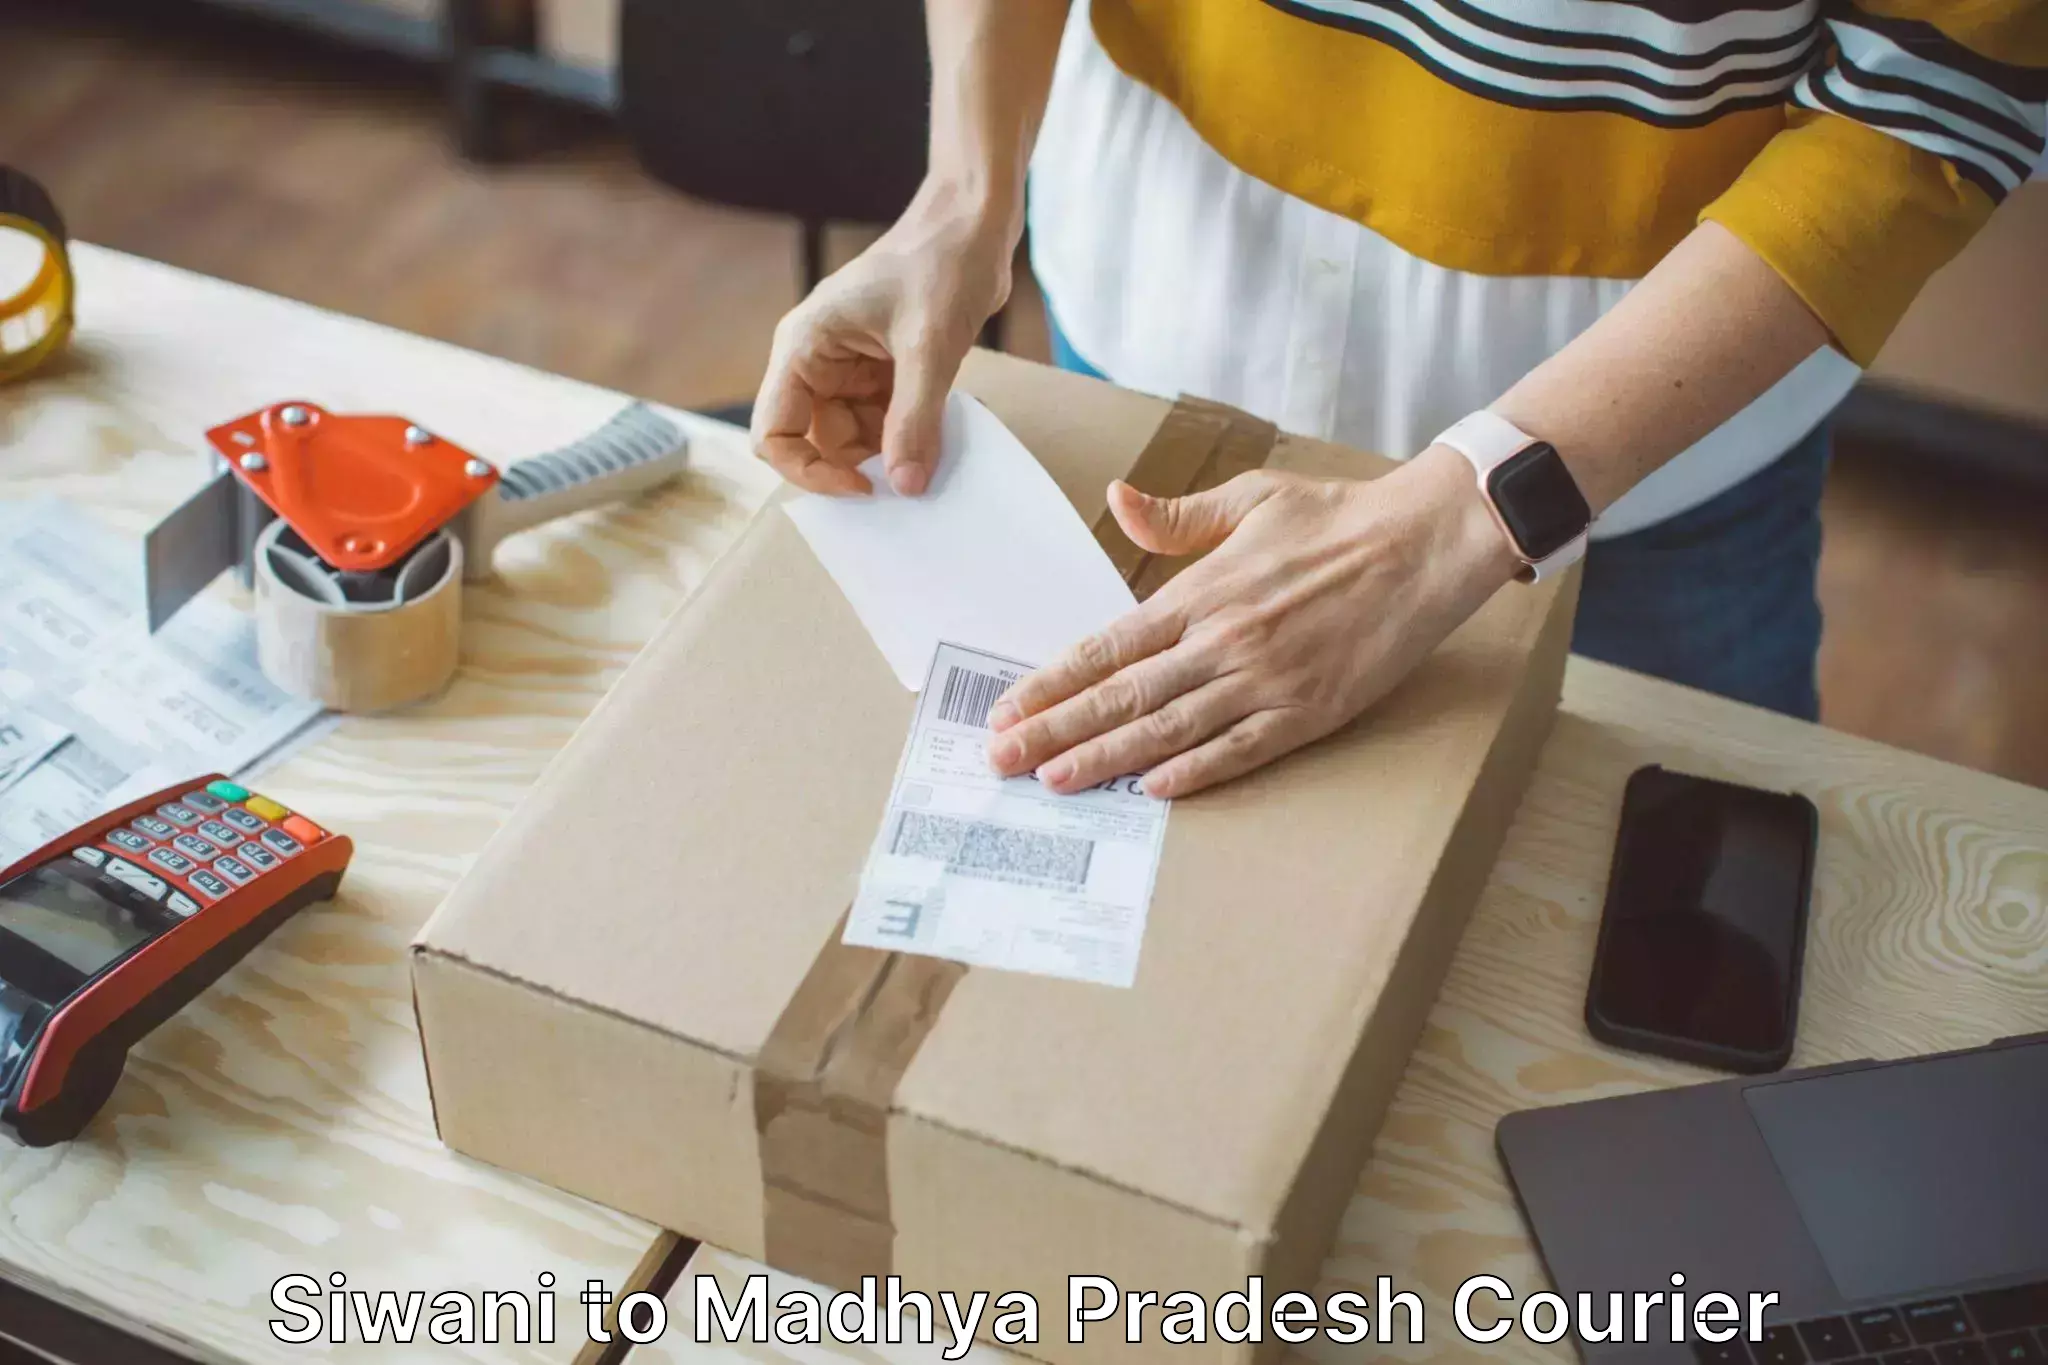 Personal effects shipping in Siwani to Madhya Pradesh